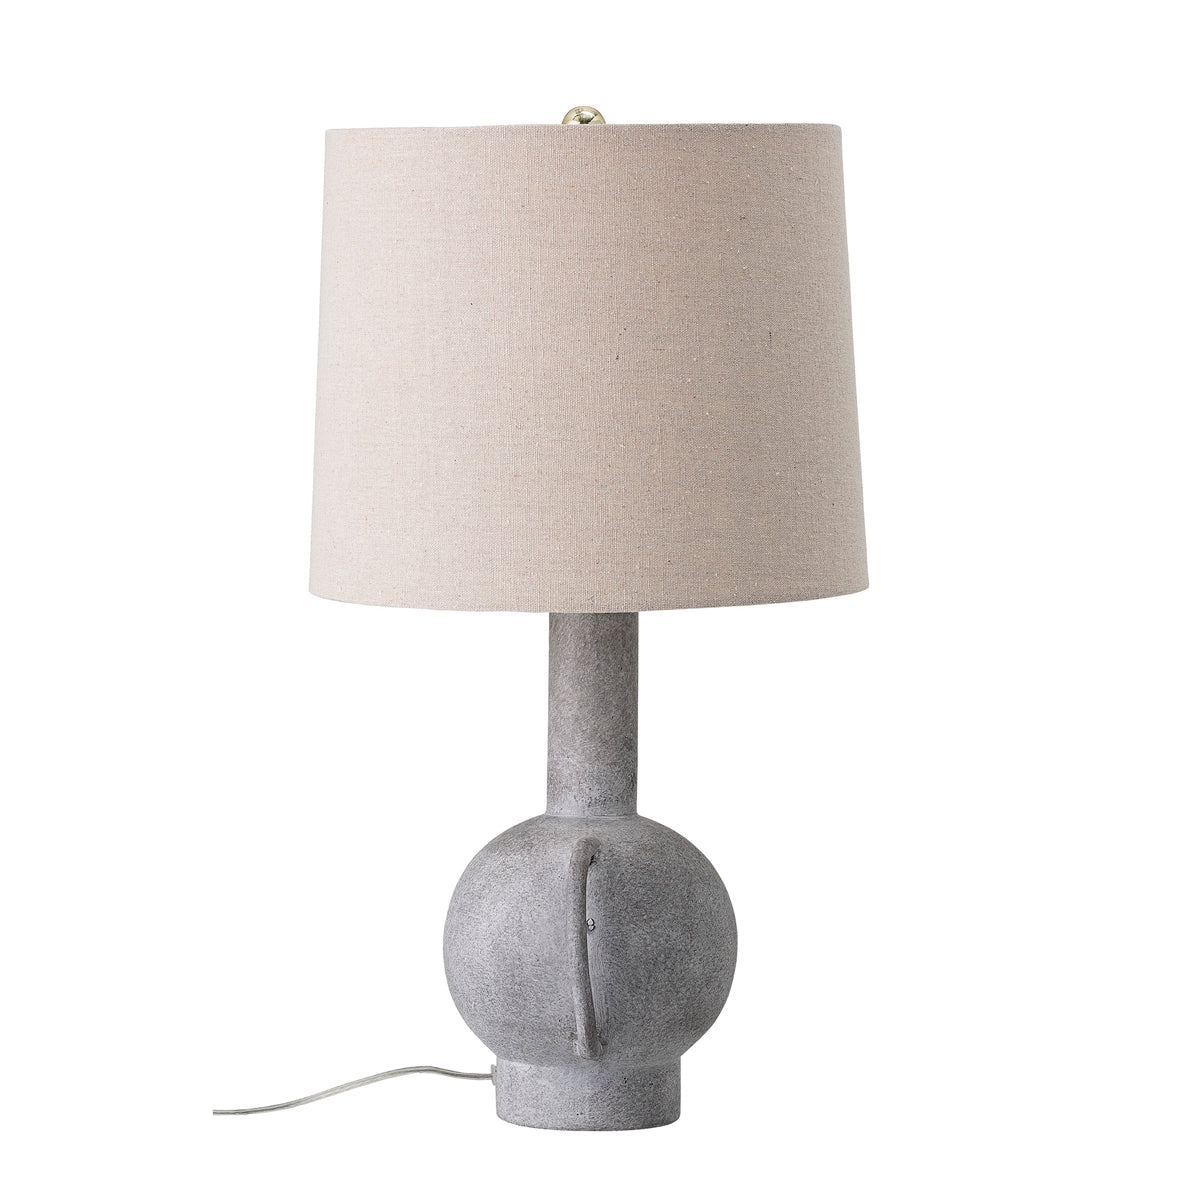 Bloomingville Table lamp, Grey, Terracotta